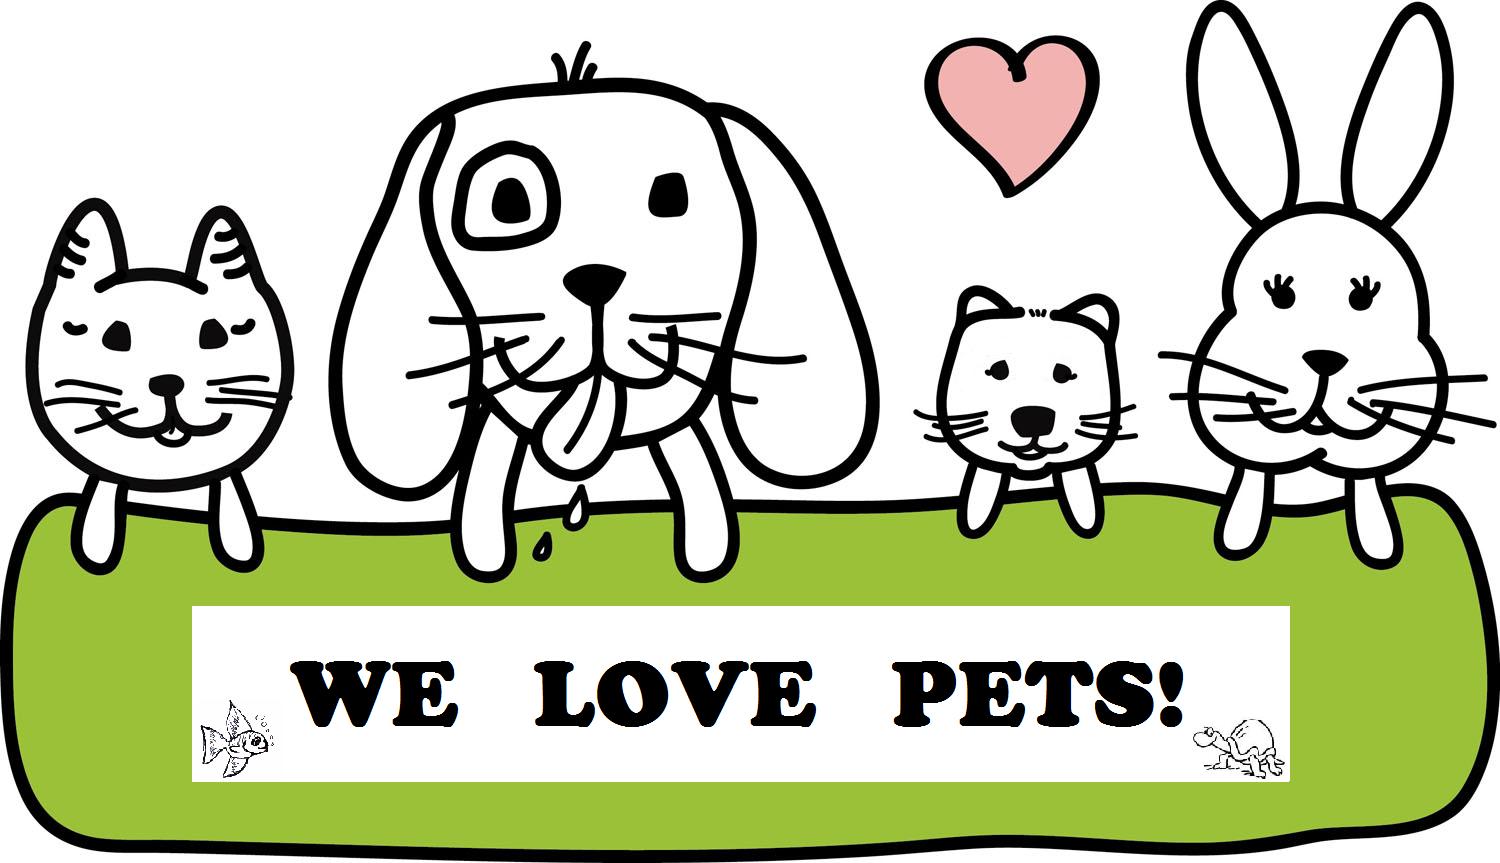 Get love pets. Pet Love. I Love my Pet для животных. I Love Pets персонажи.